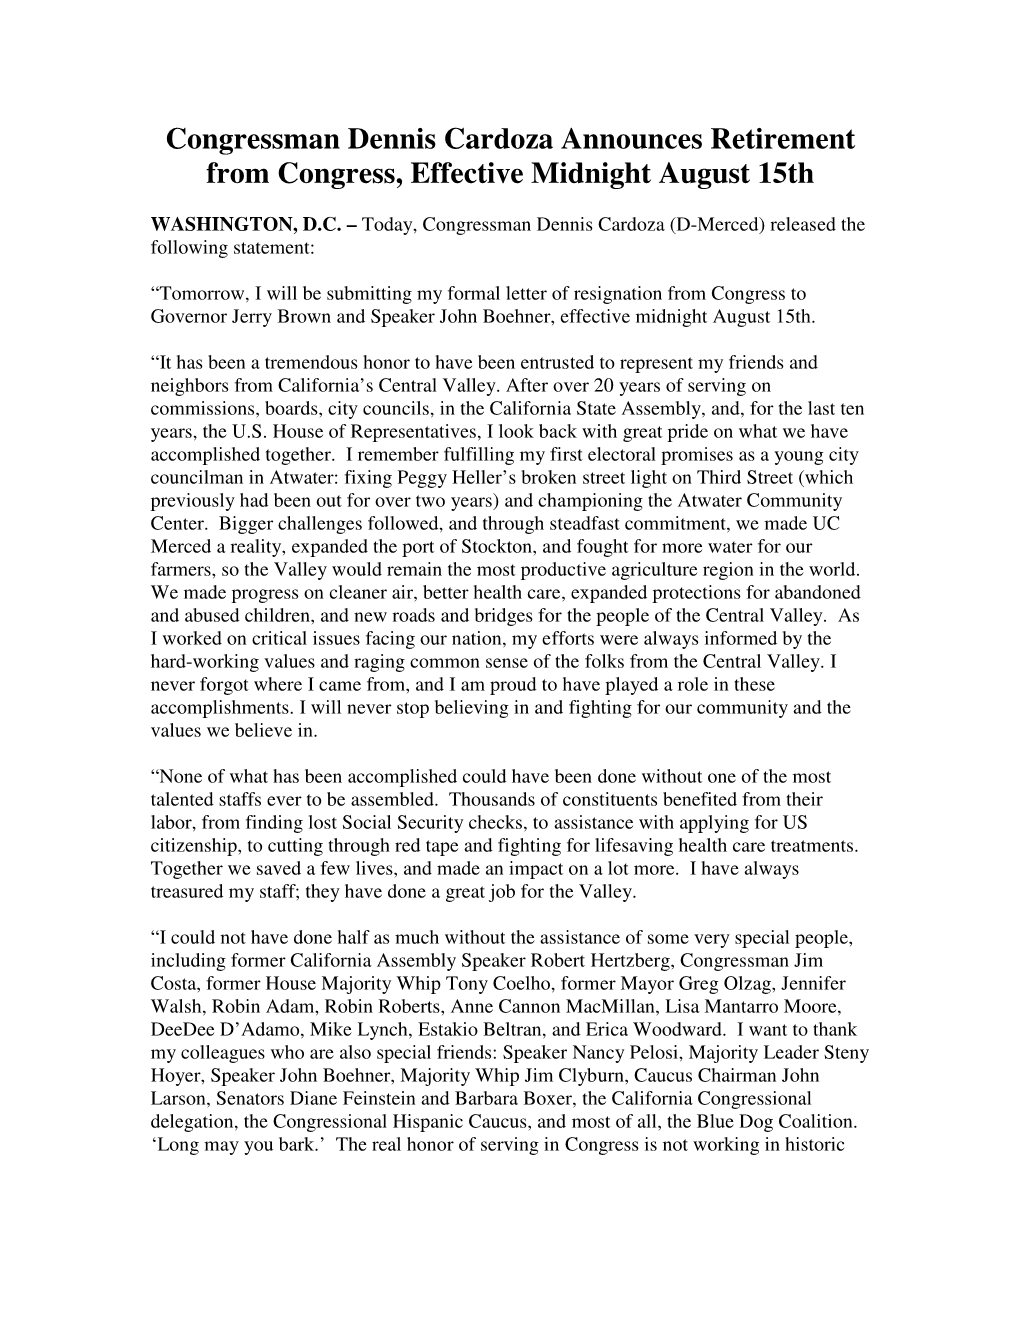 Congressman Dennis Cardoza Announces Retirement from Congress, Effective Midnight August 15Th